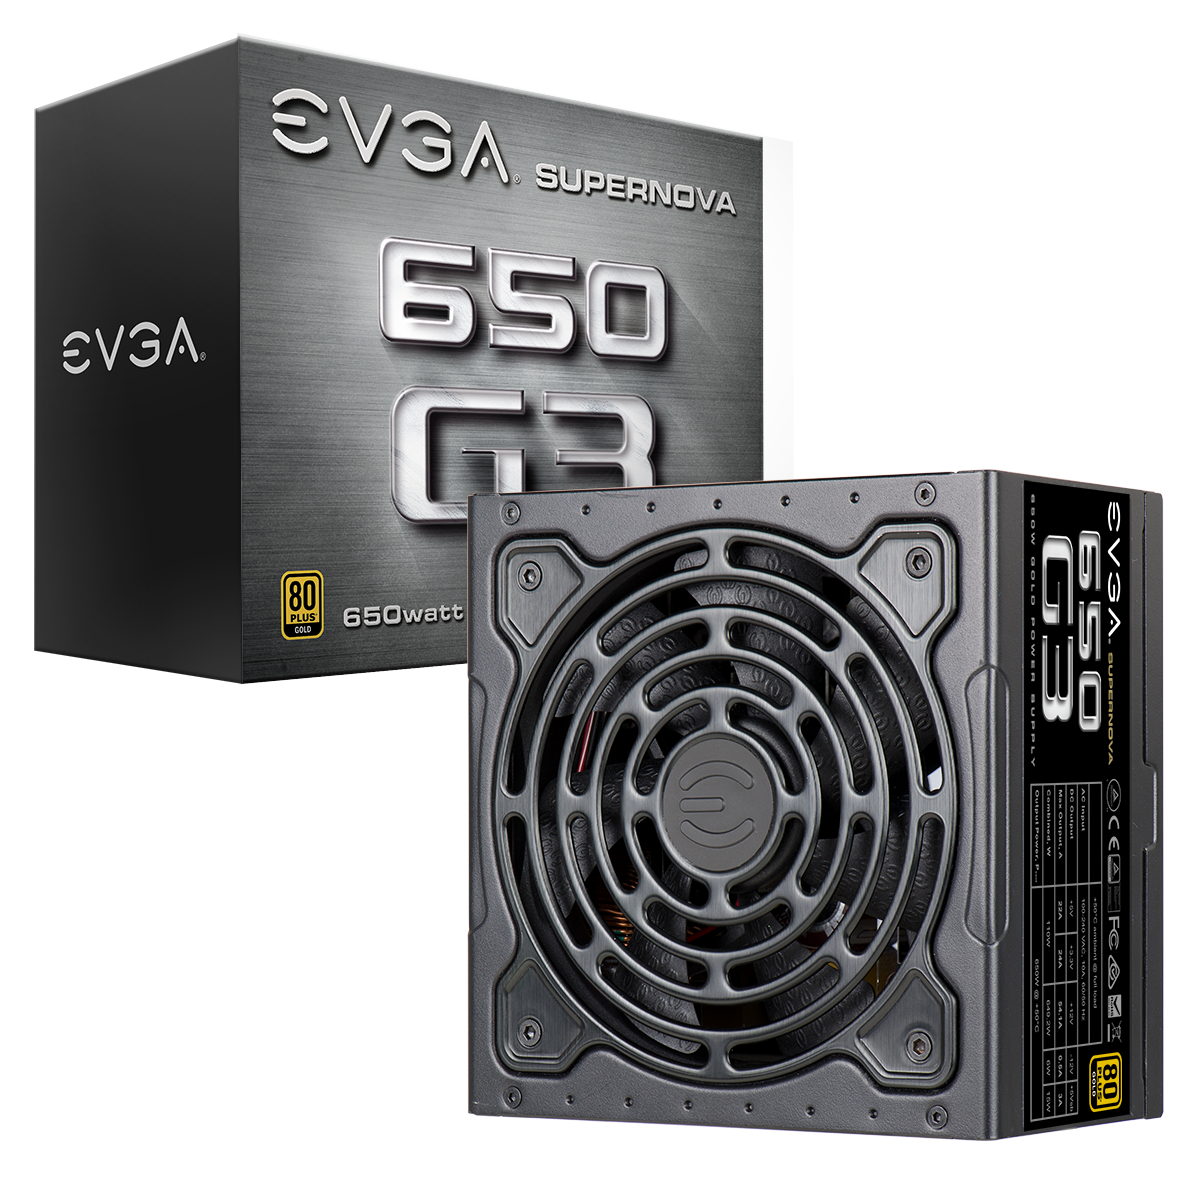 EVGA - Products - EVGA SuperNOVA 650 G3, 80 Plus Gold 650W, Fully